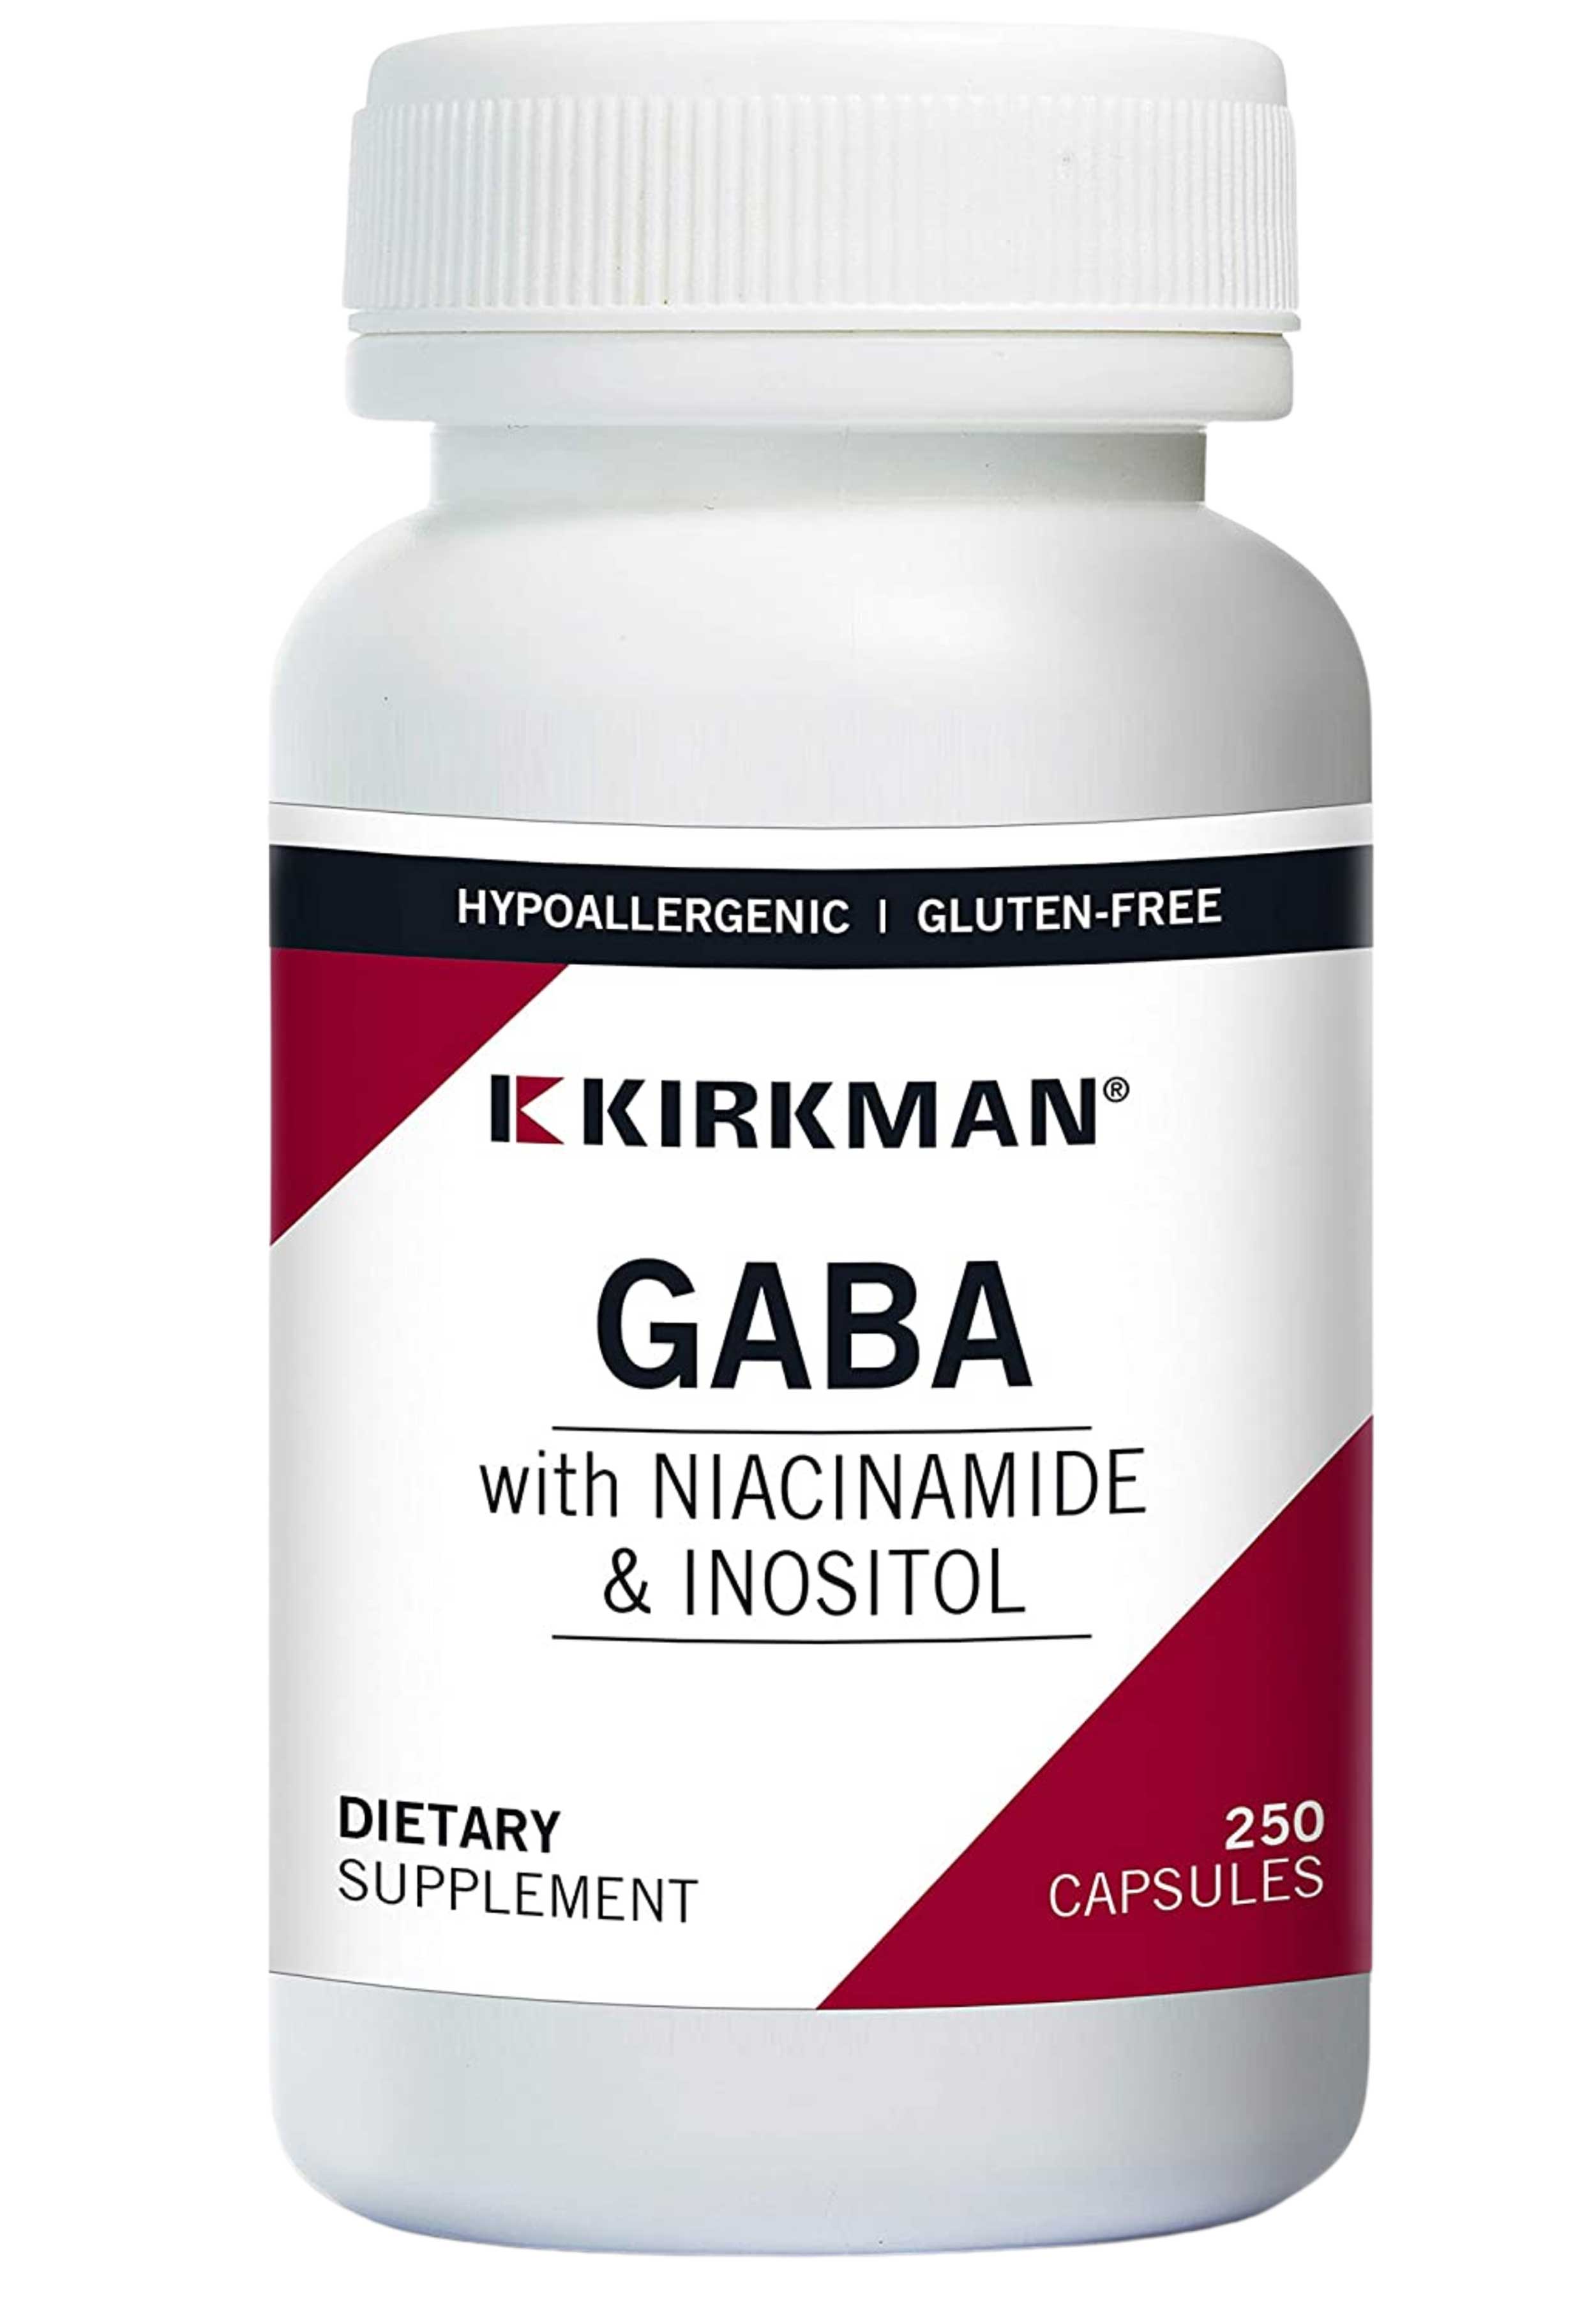 Kirkman GABA with Niacinamide and Inositol